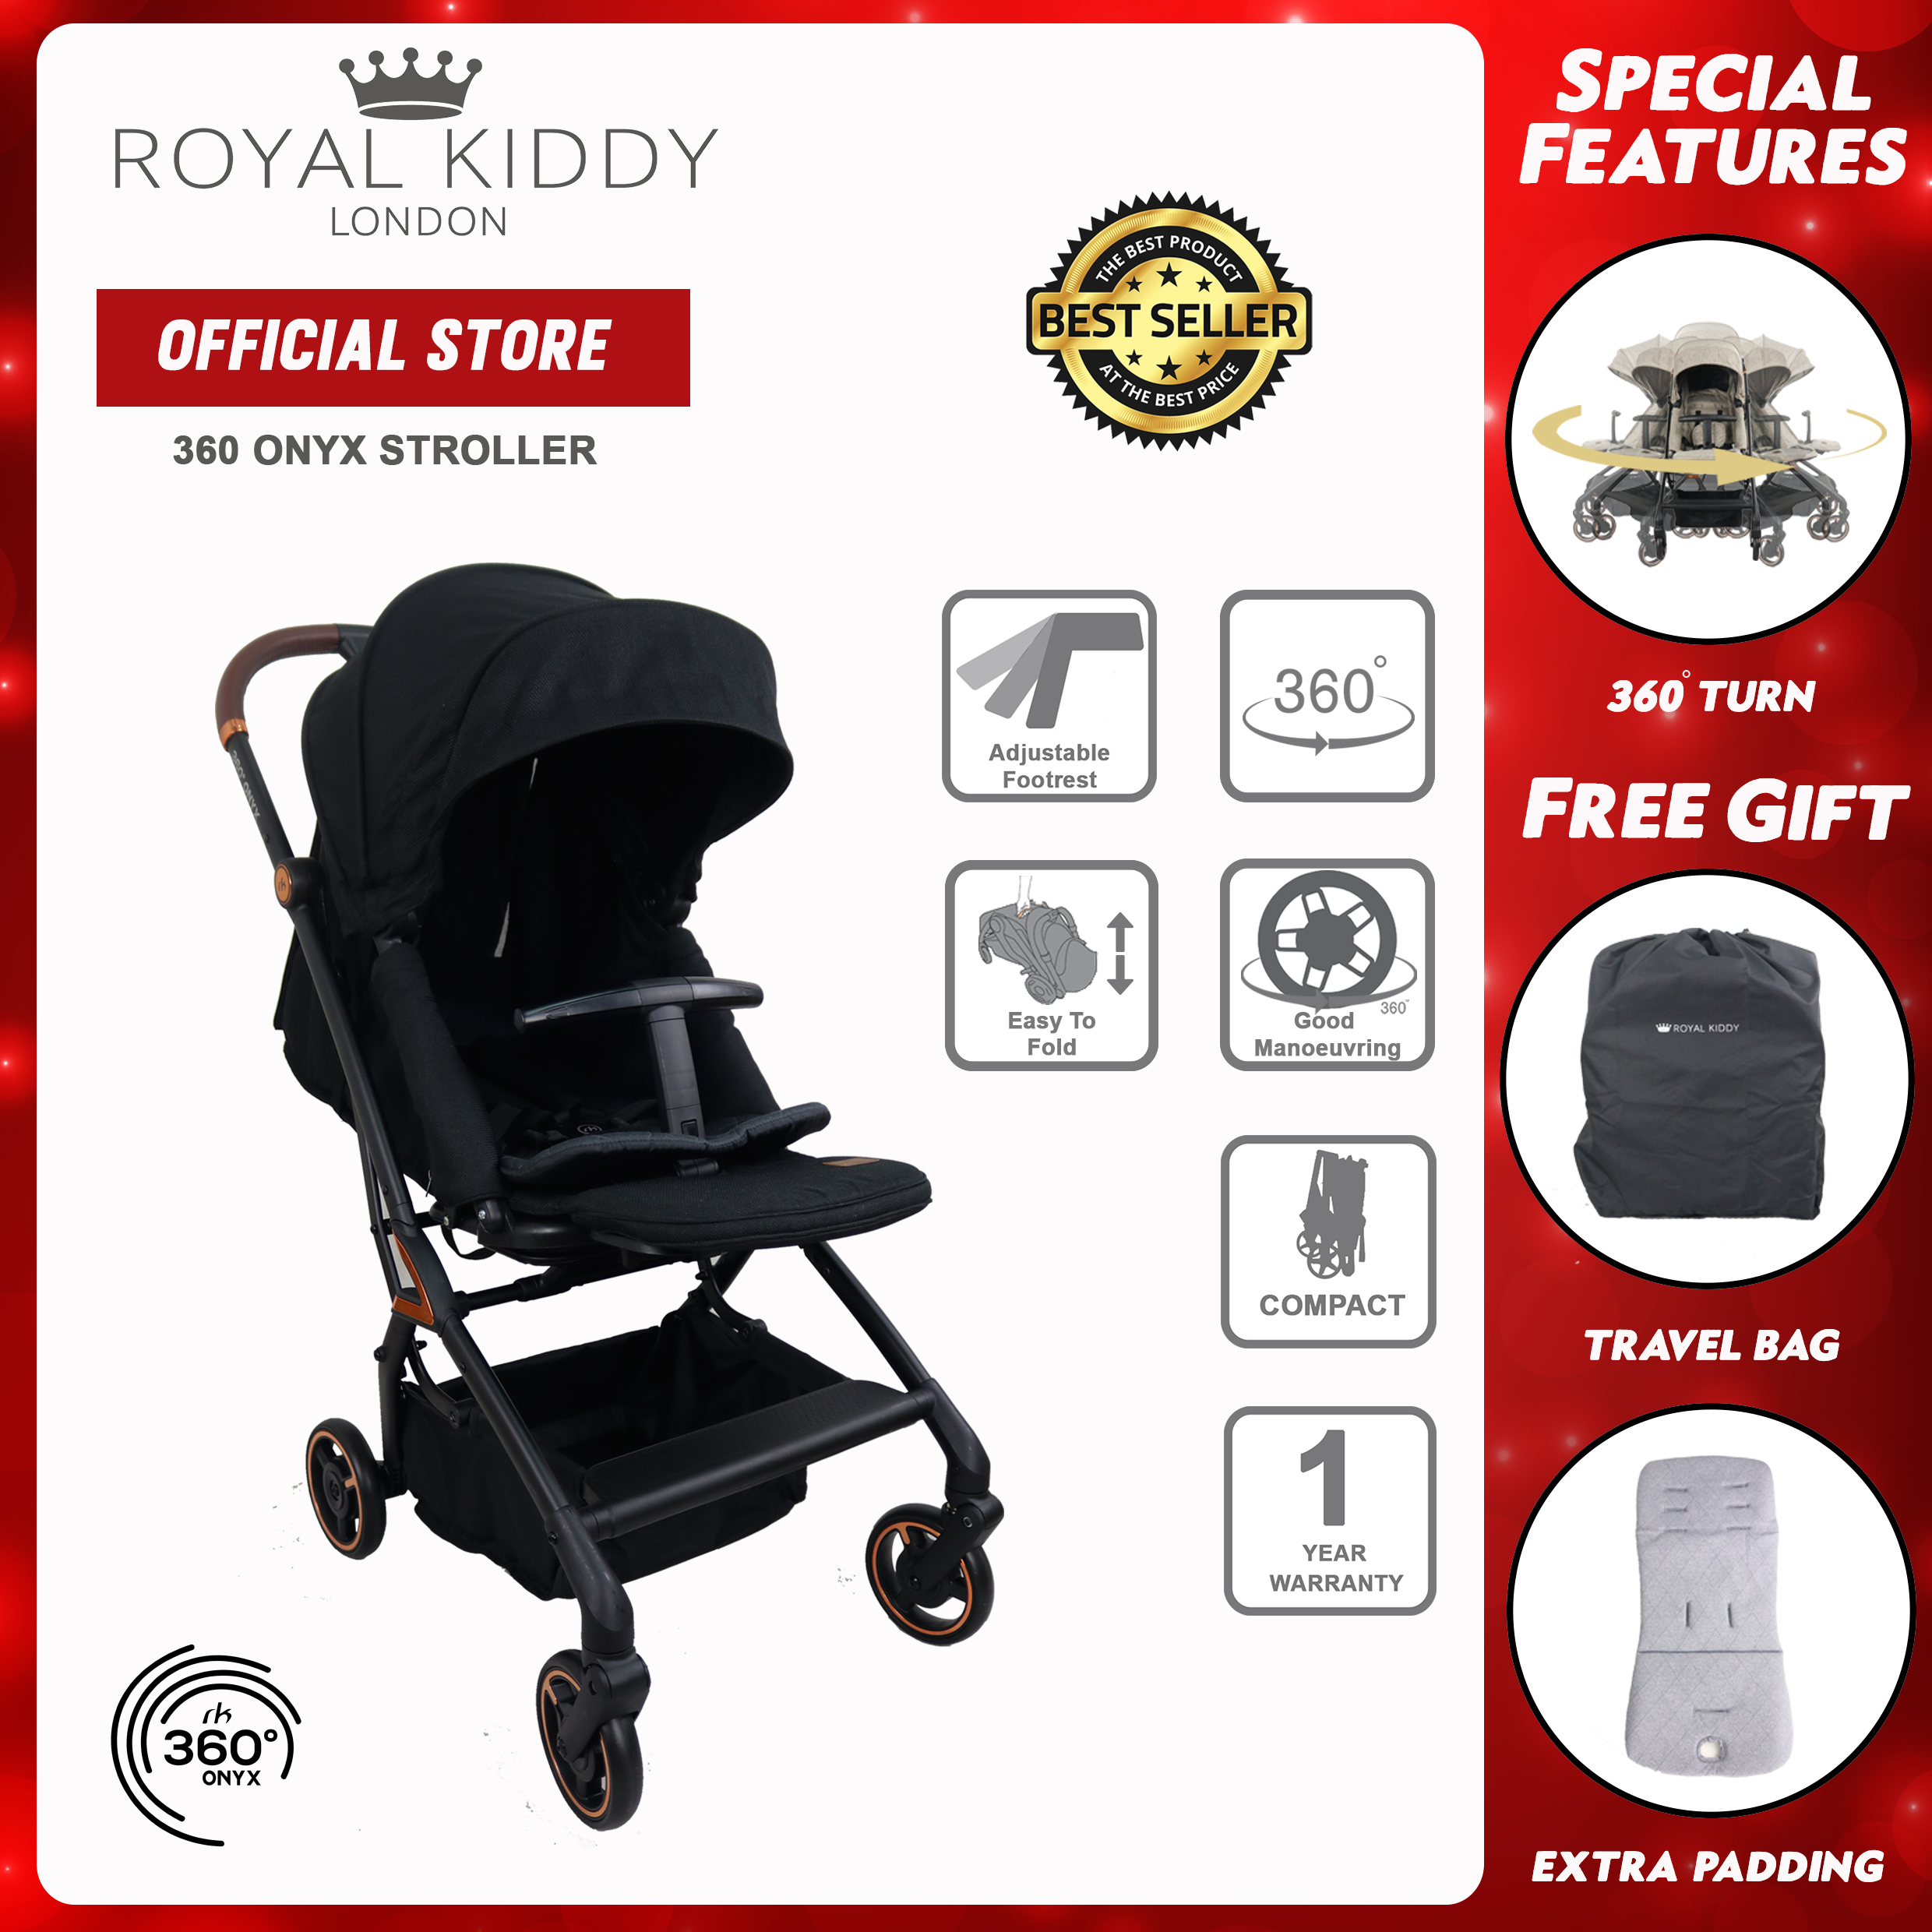 royal kiddy stroller review